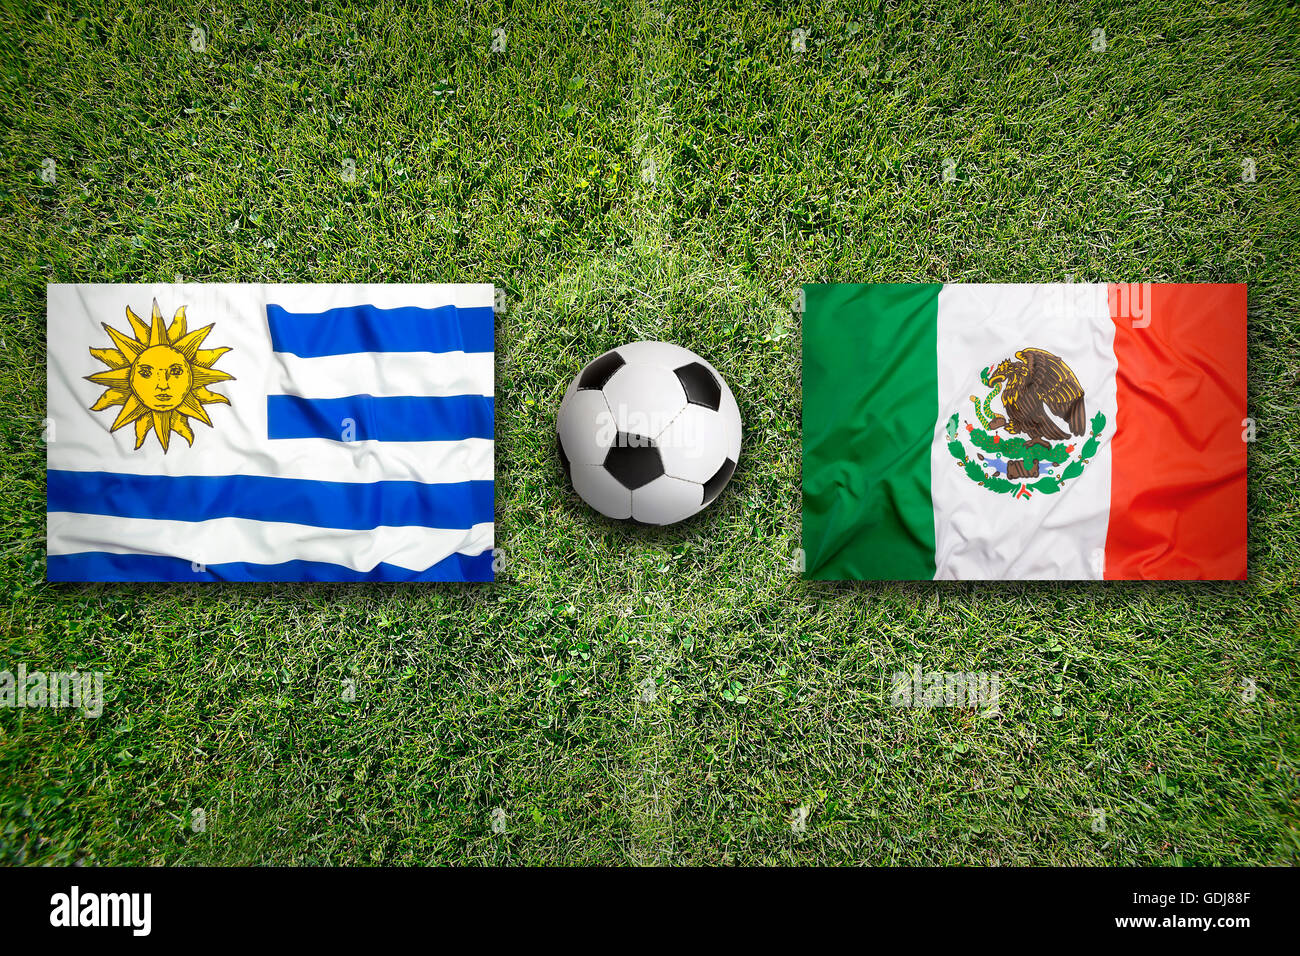 Uruguay vs. Mexico flags on green soccer field Stock Photo